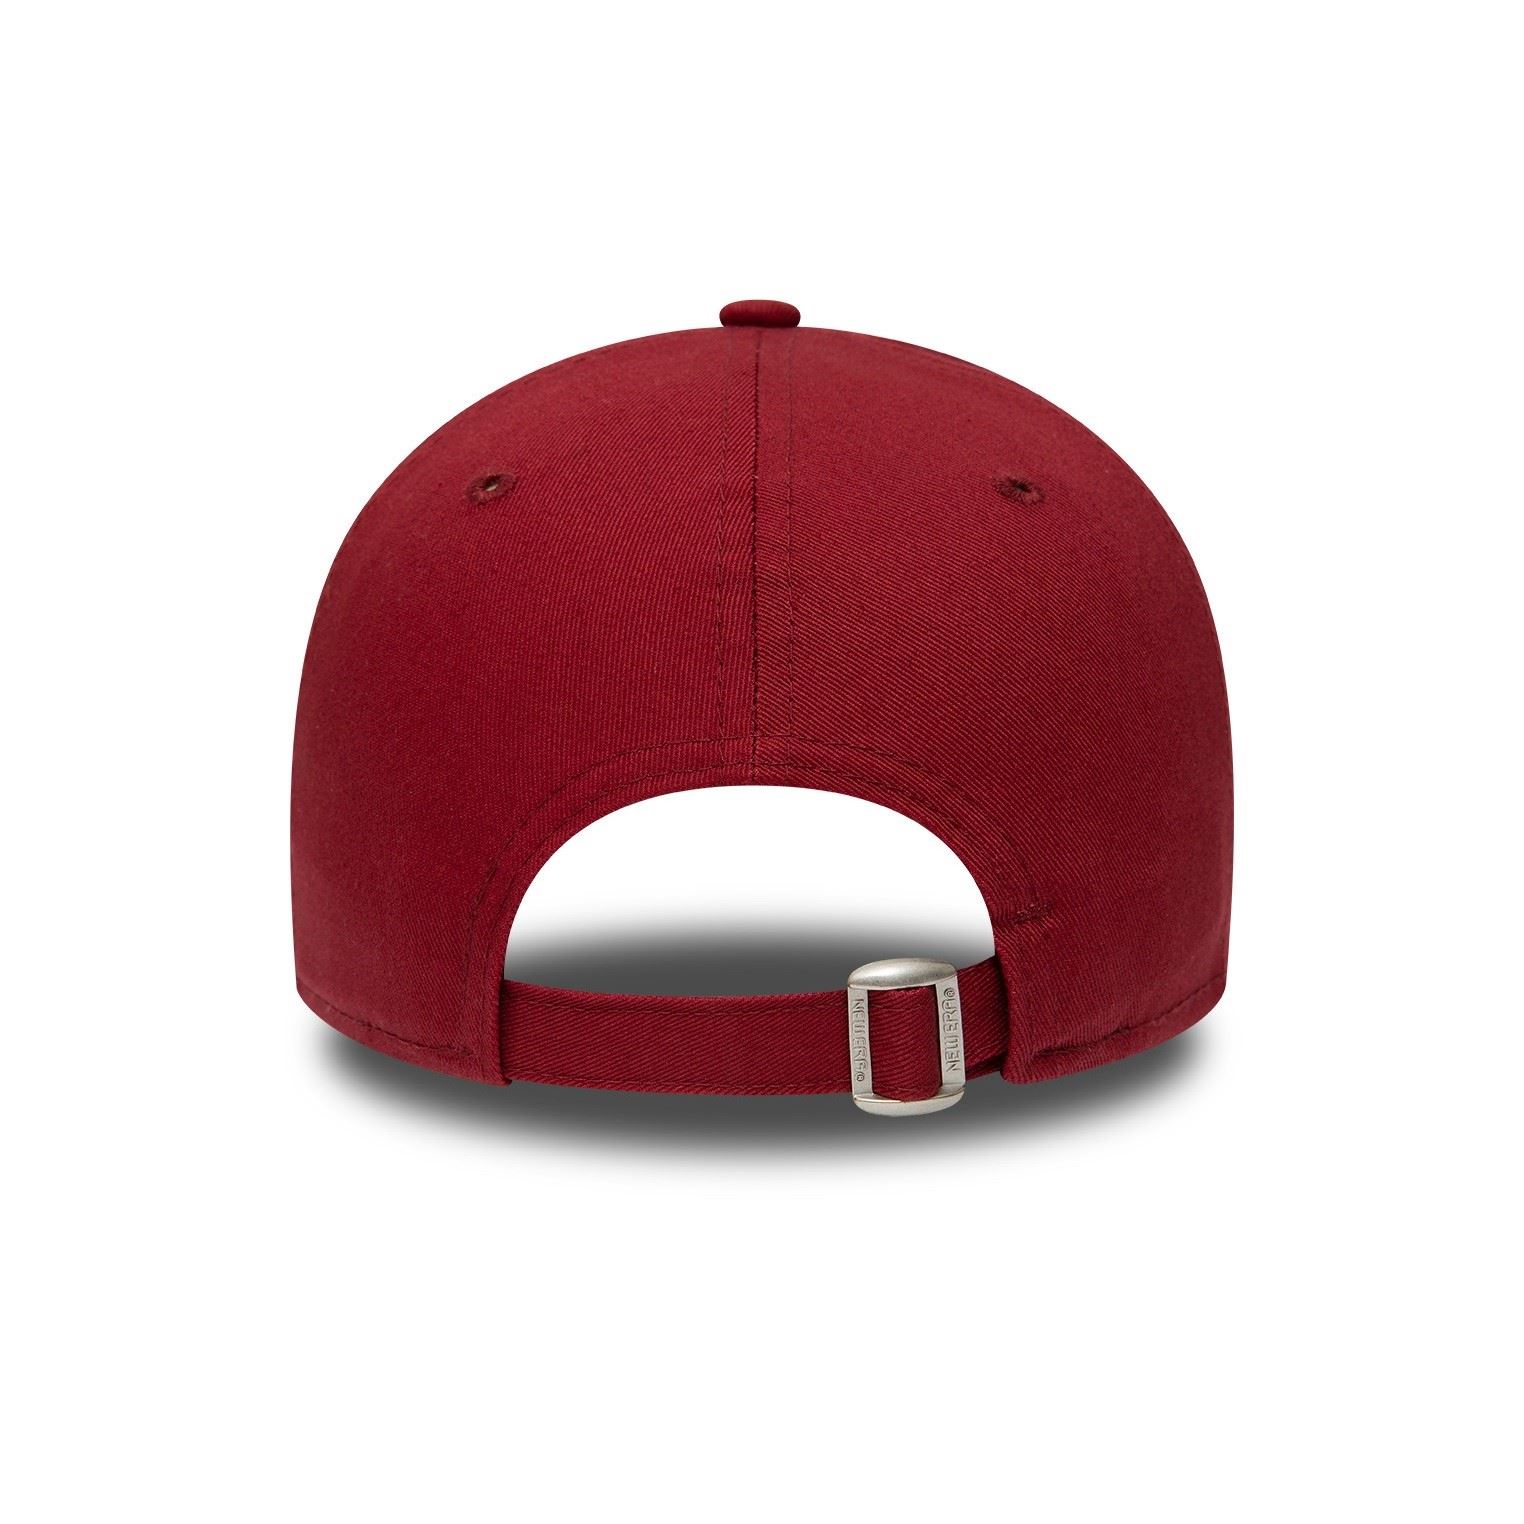 New York Yankees League Essential Cardinal 9Forty Adjustable Cap New Era